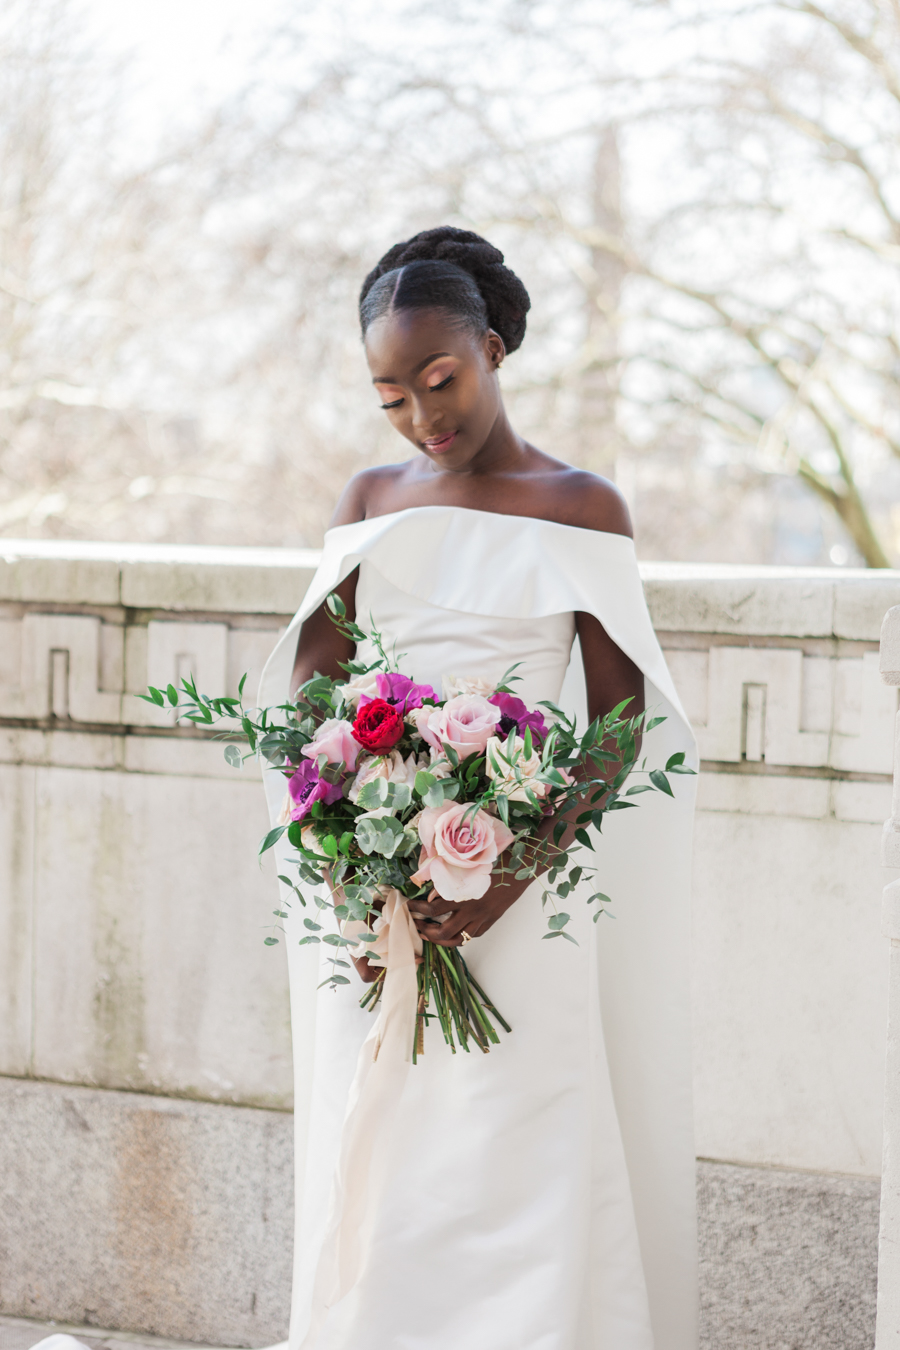 Breathtakingly beautiful - diversity wins in this stunning RSA London wedding editorial! (24)